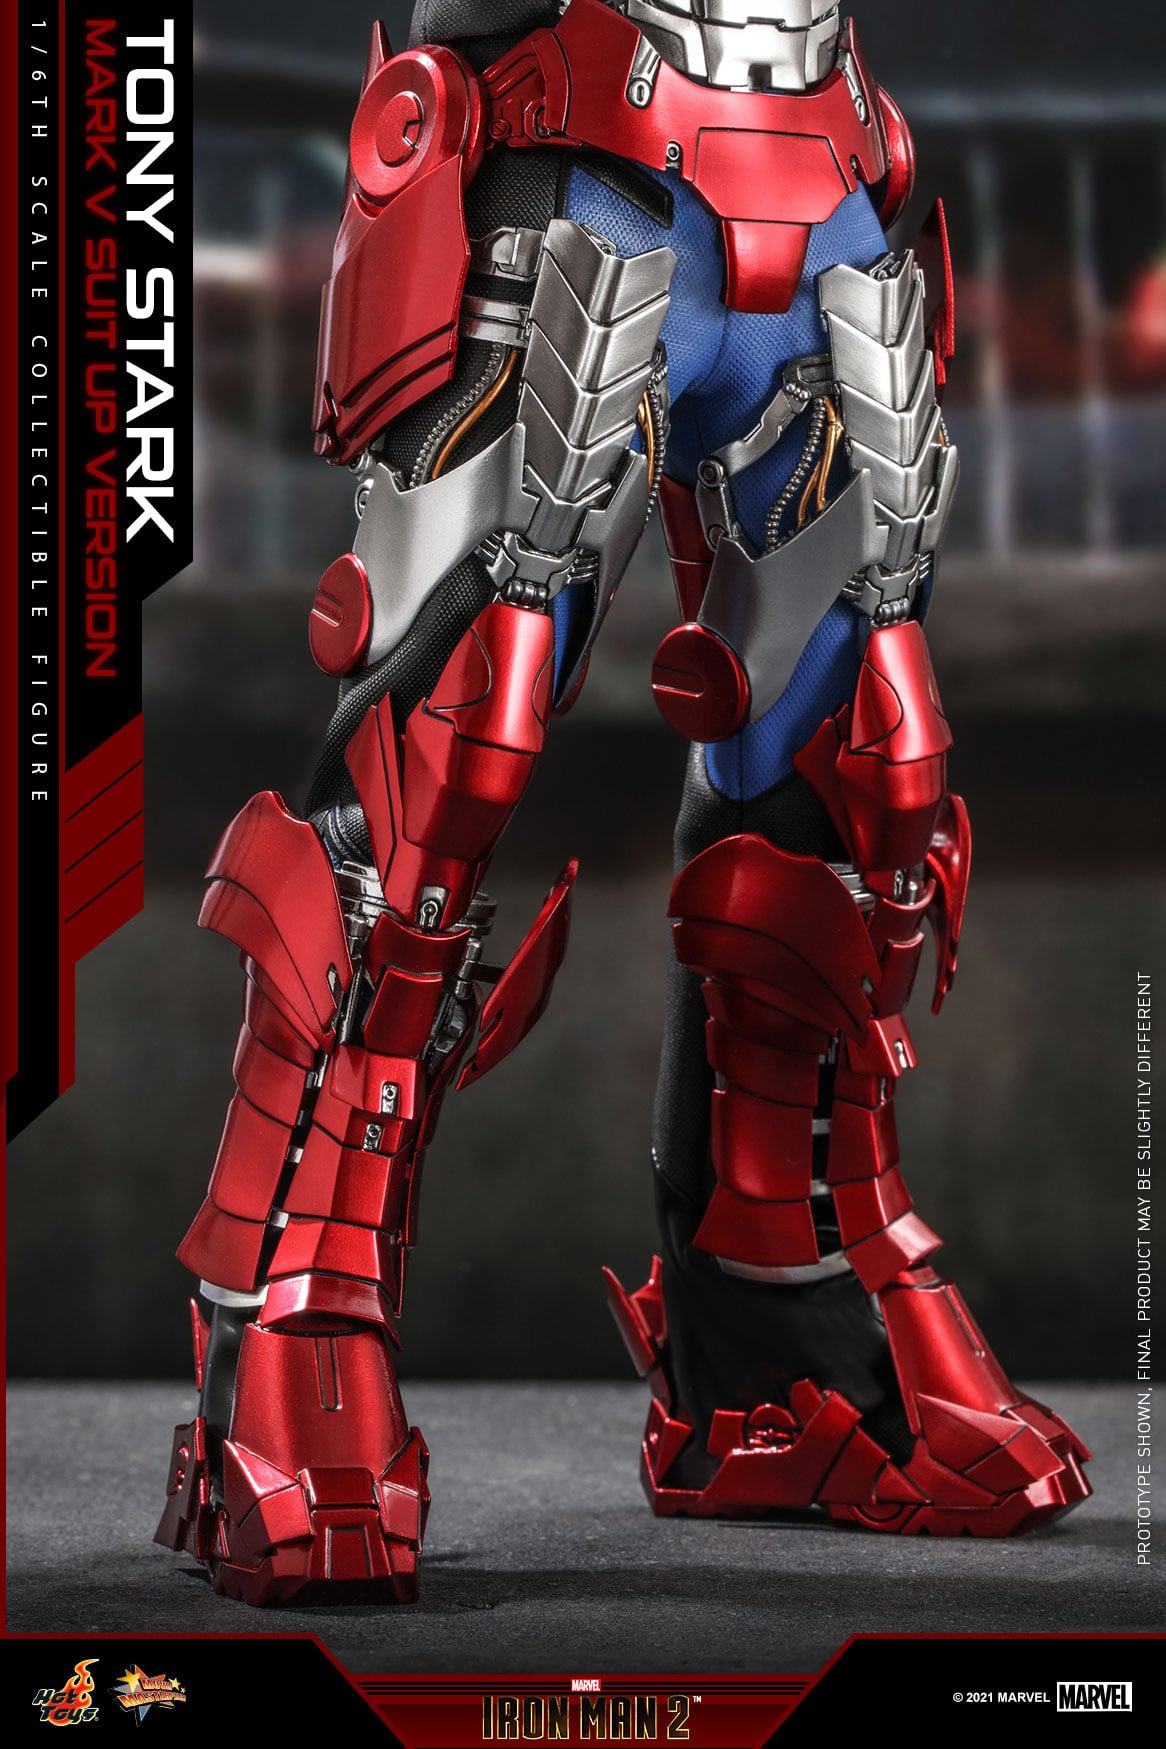 Hot Toys - MMS599 - Iron Man 2 - Tony Stark (Mark V Suit Up Ver.) - Marvelous Toys